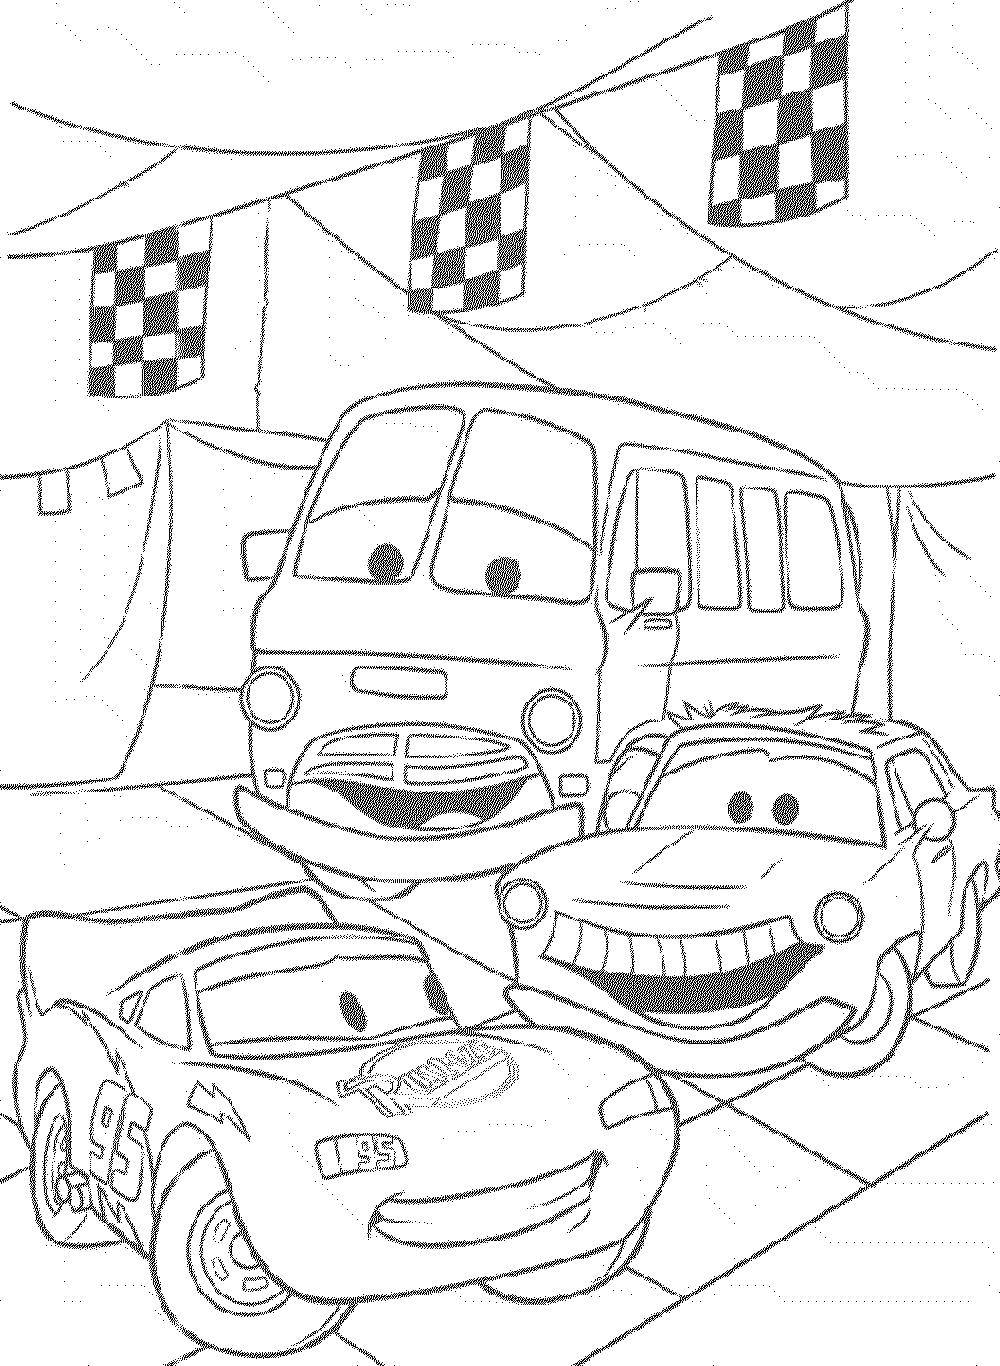 Coloring Wheelbarrow makvin with friends. Category Wheelbarrows. Tags:  cars, Makvin.